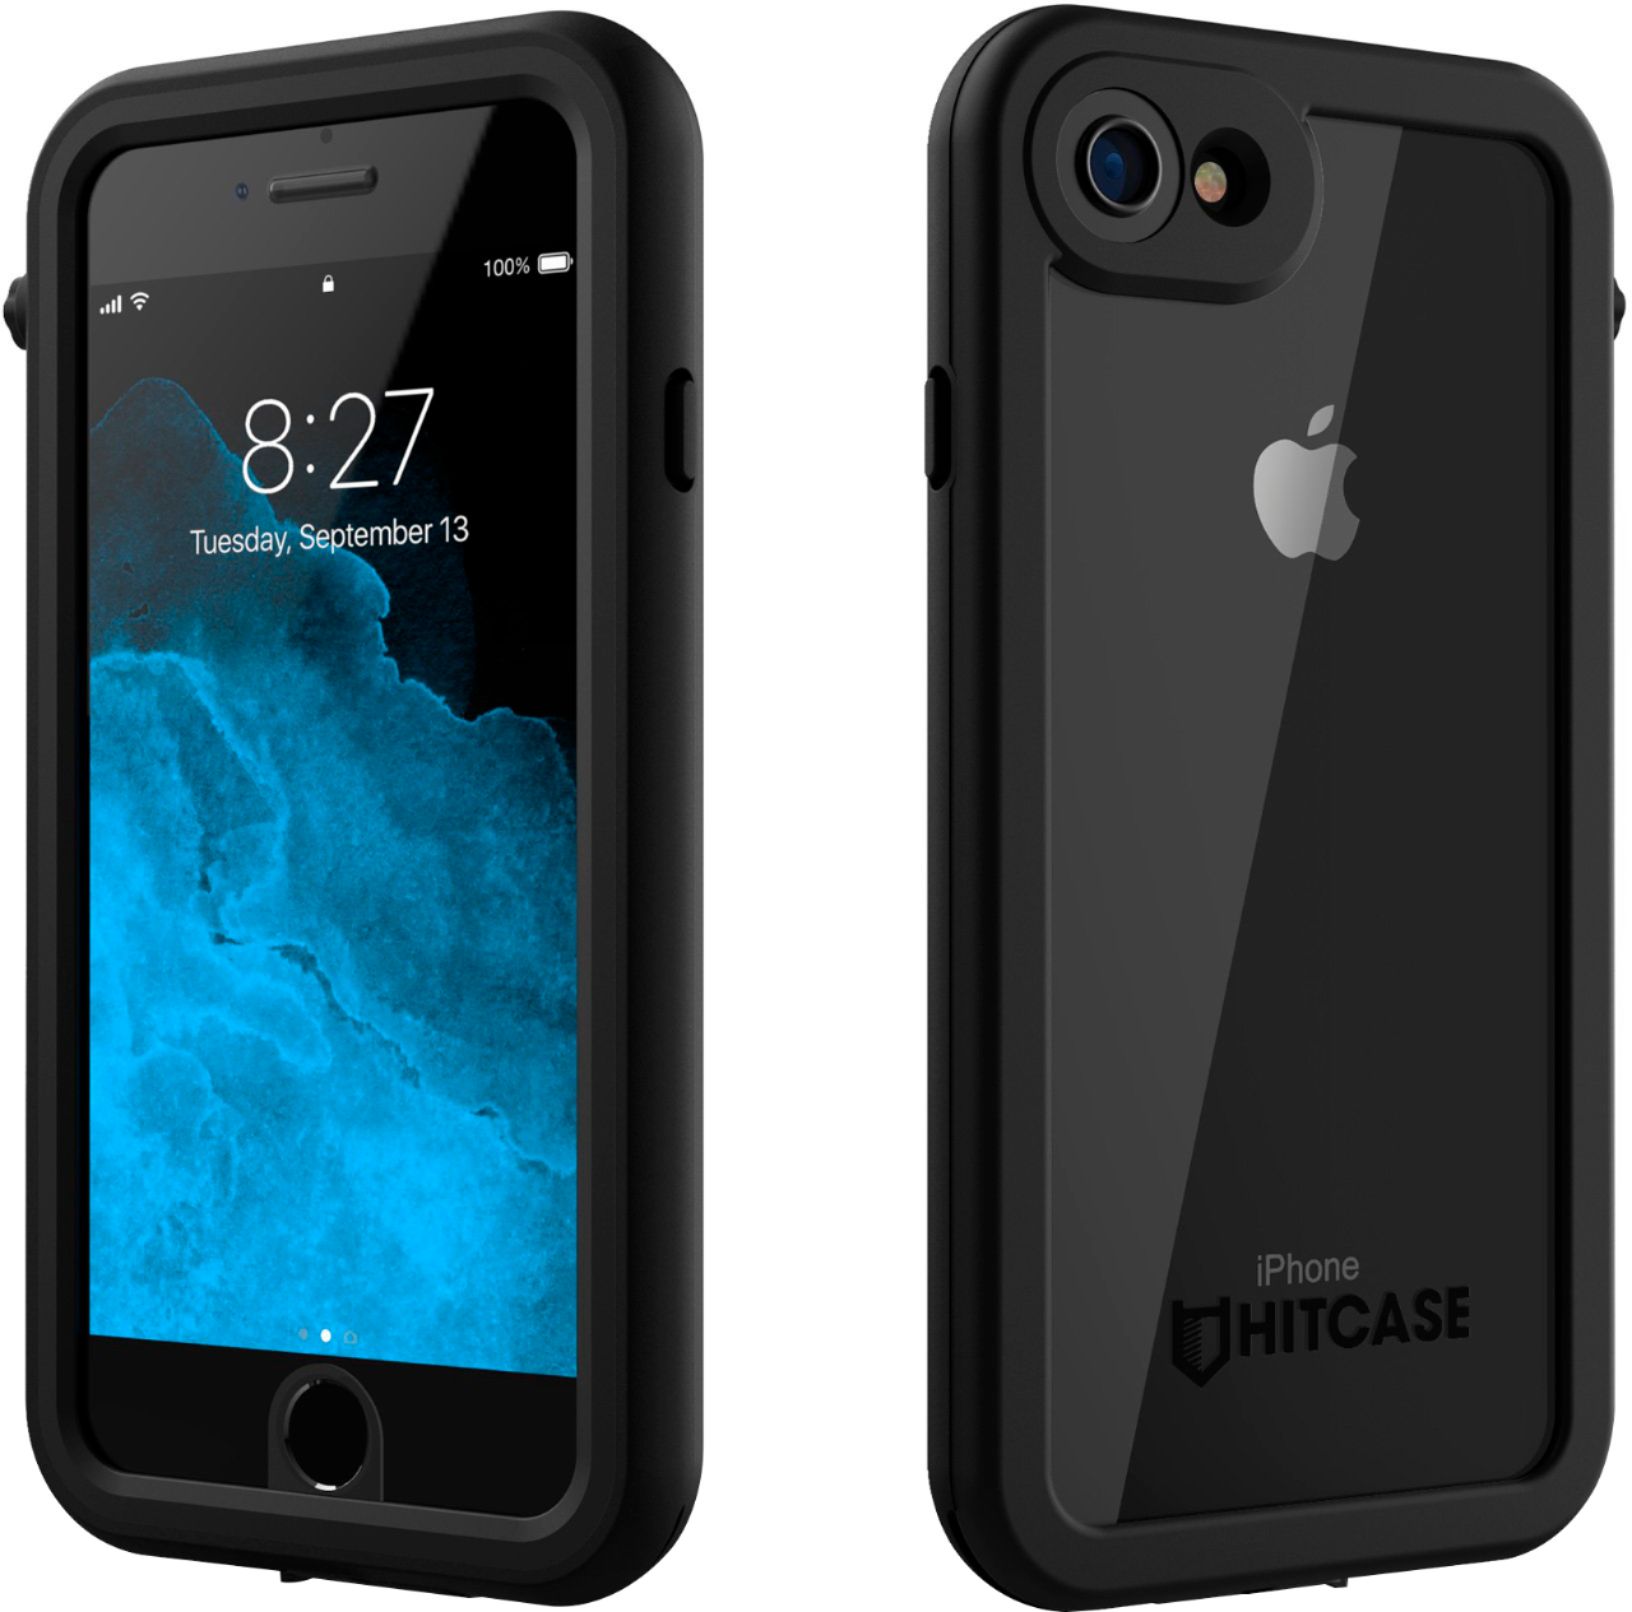 Hitcase Pro: 10M Waterproof & 5M Shockproof iPhone 7/8 Plus Case